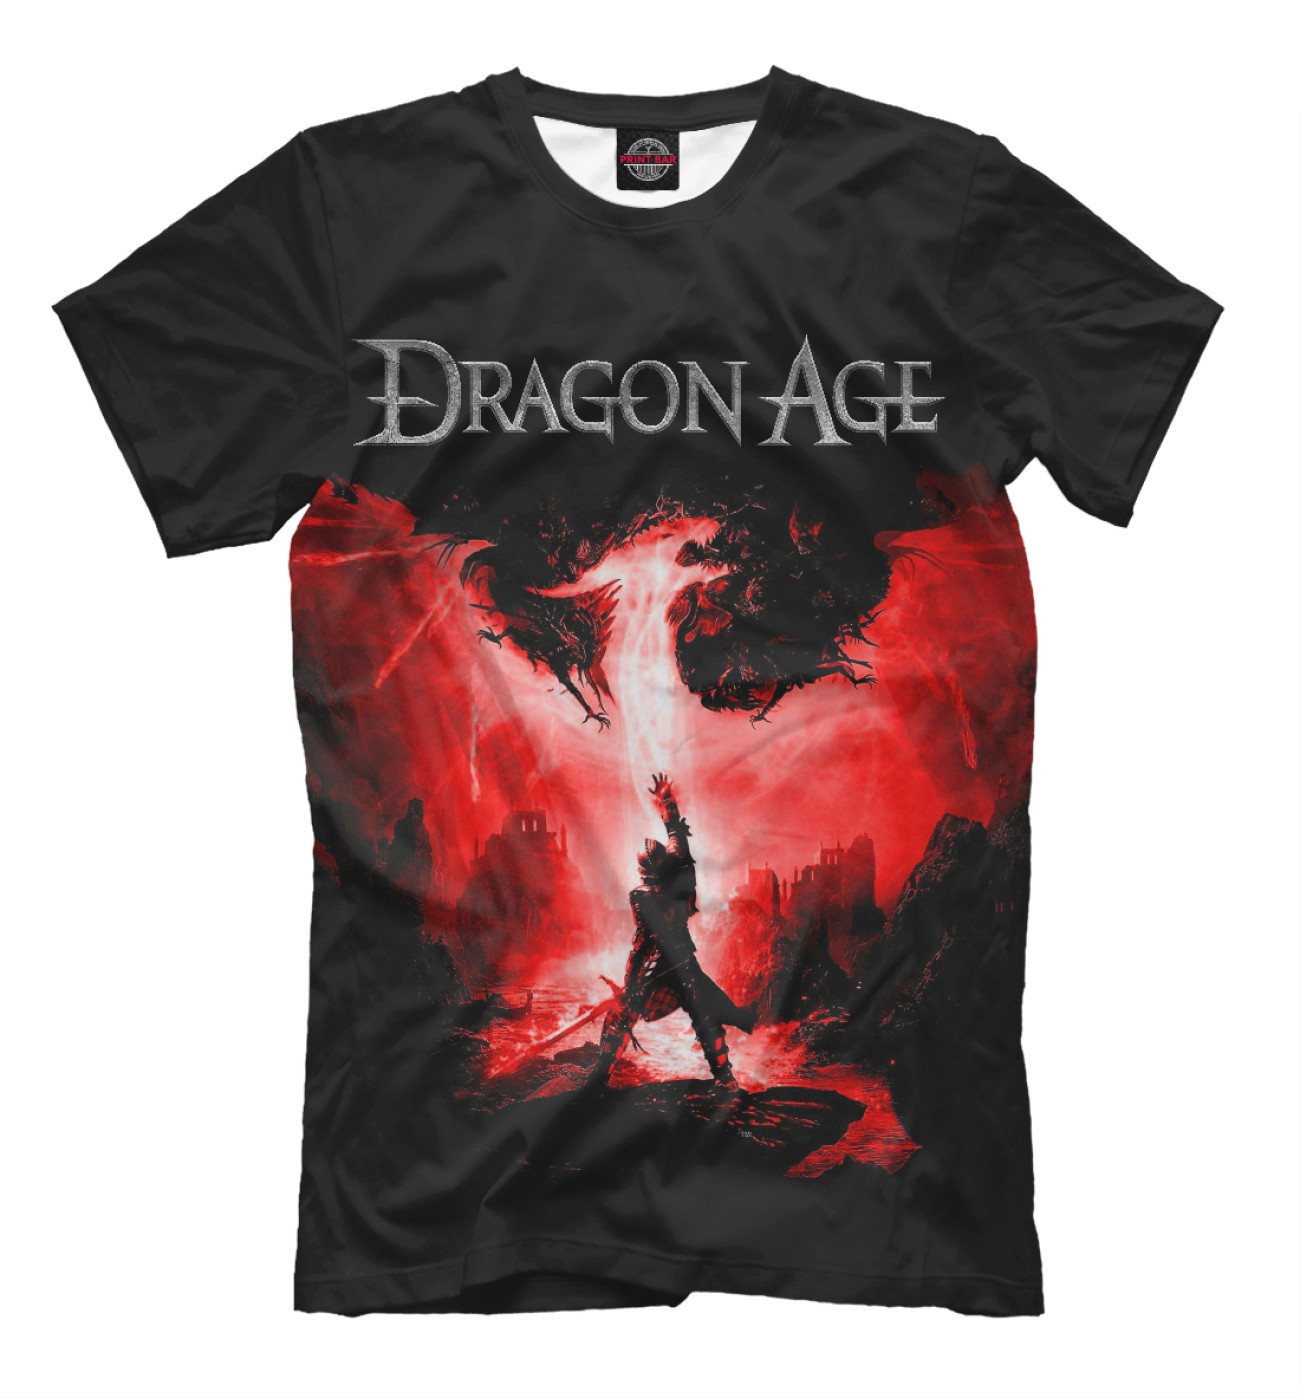 Мужская Футболка Dragon Age, артикул: DRG-439140-fut-2